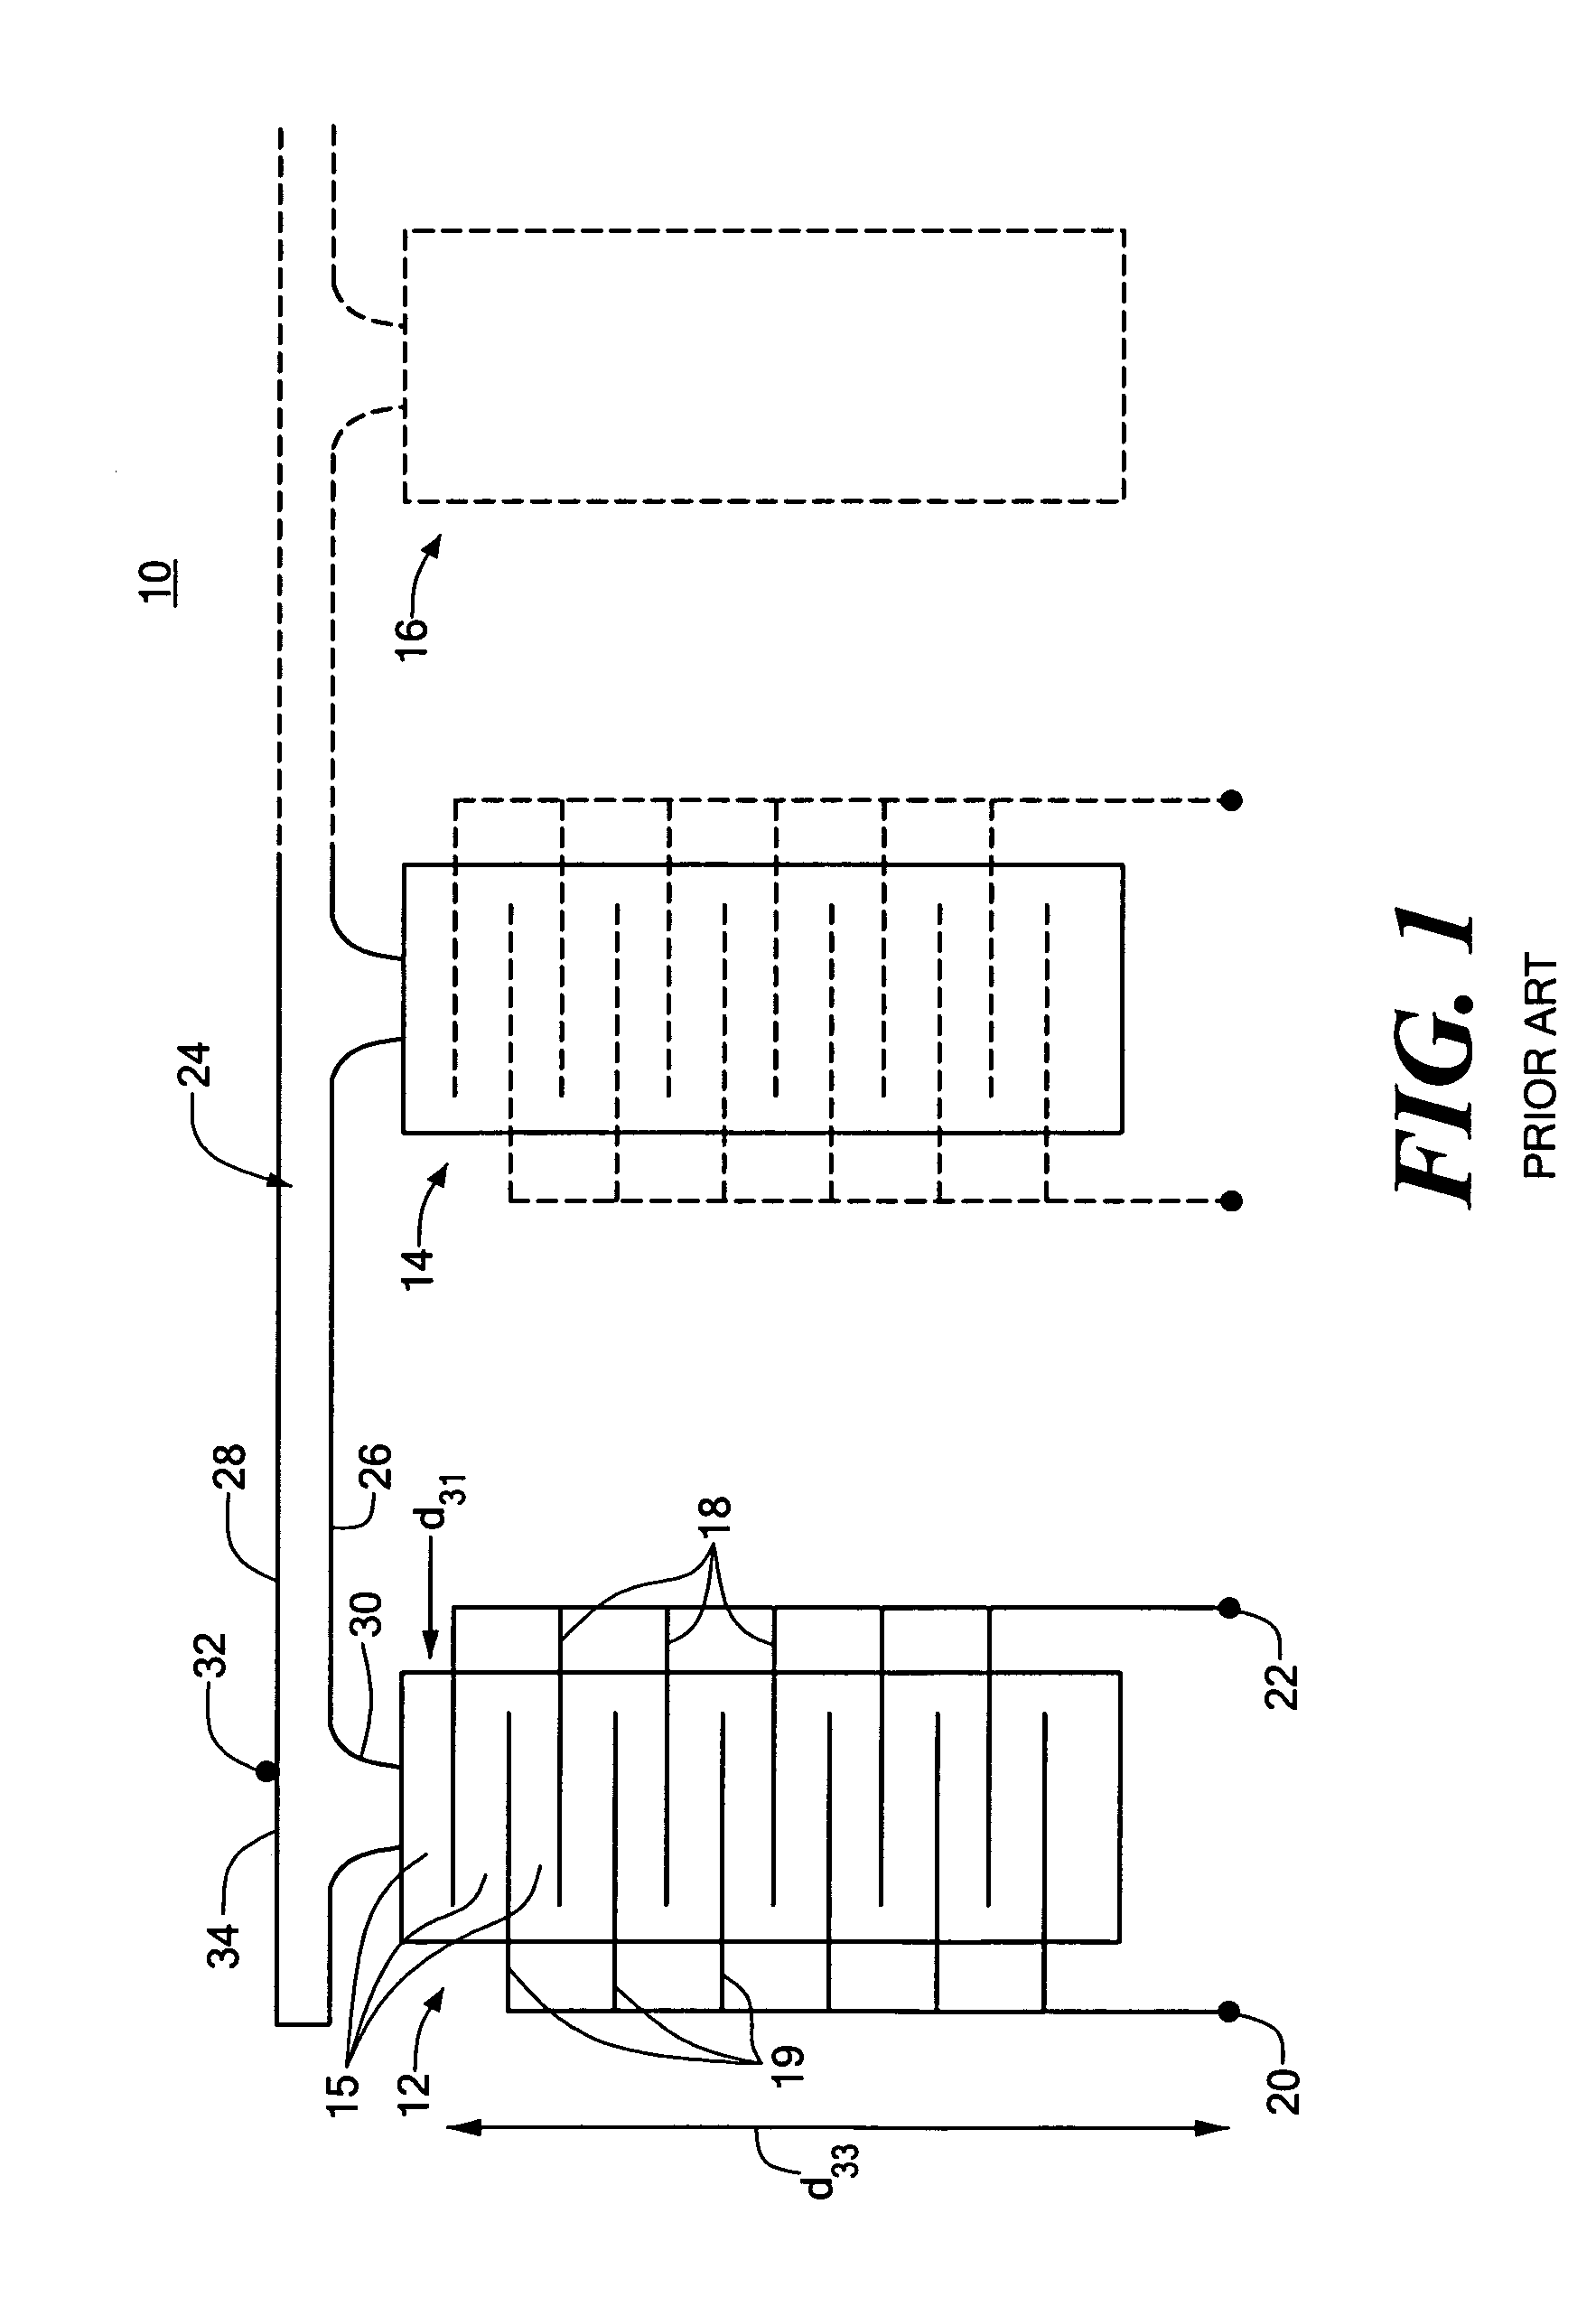 Transverse electrodisplacive actuator array